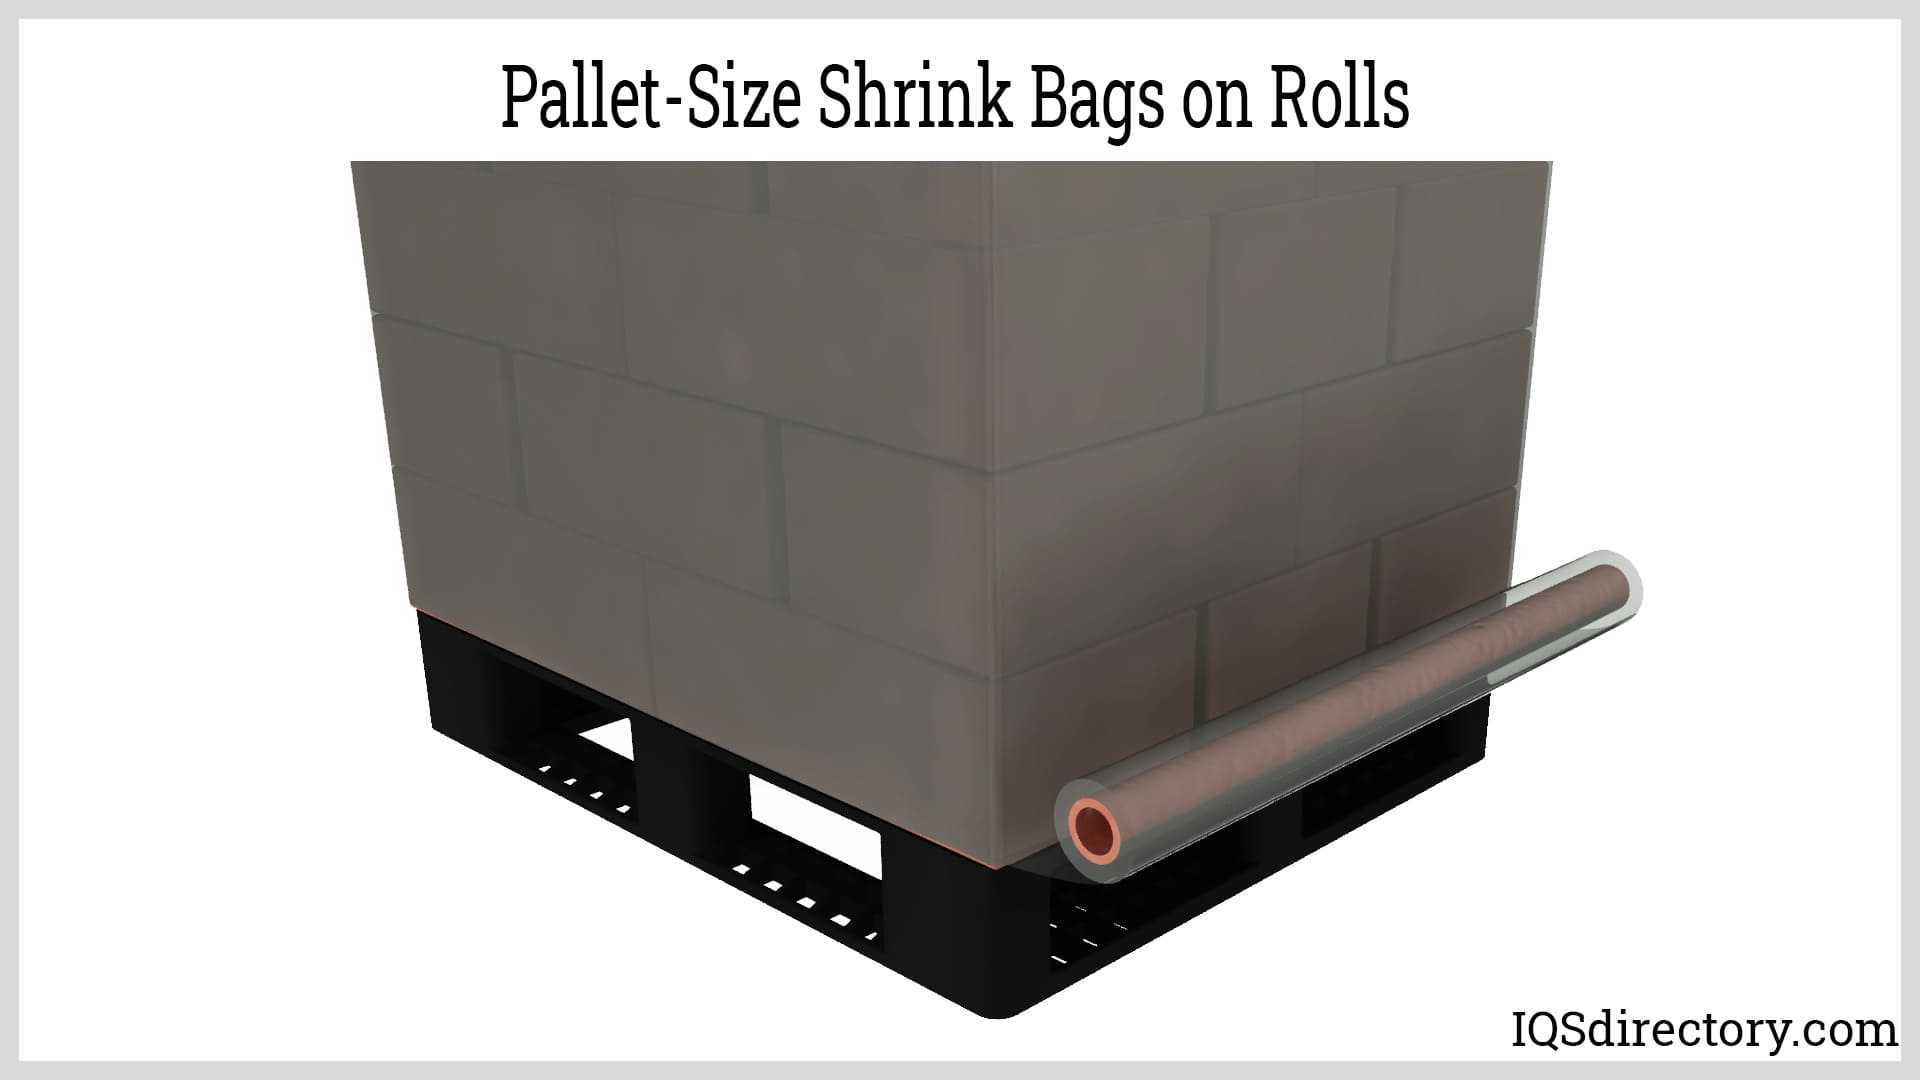 Pallet-Size Shrink Bags on Rolls